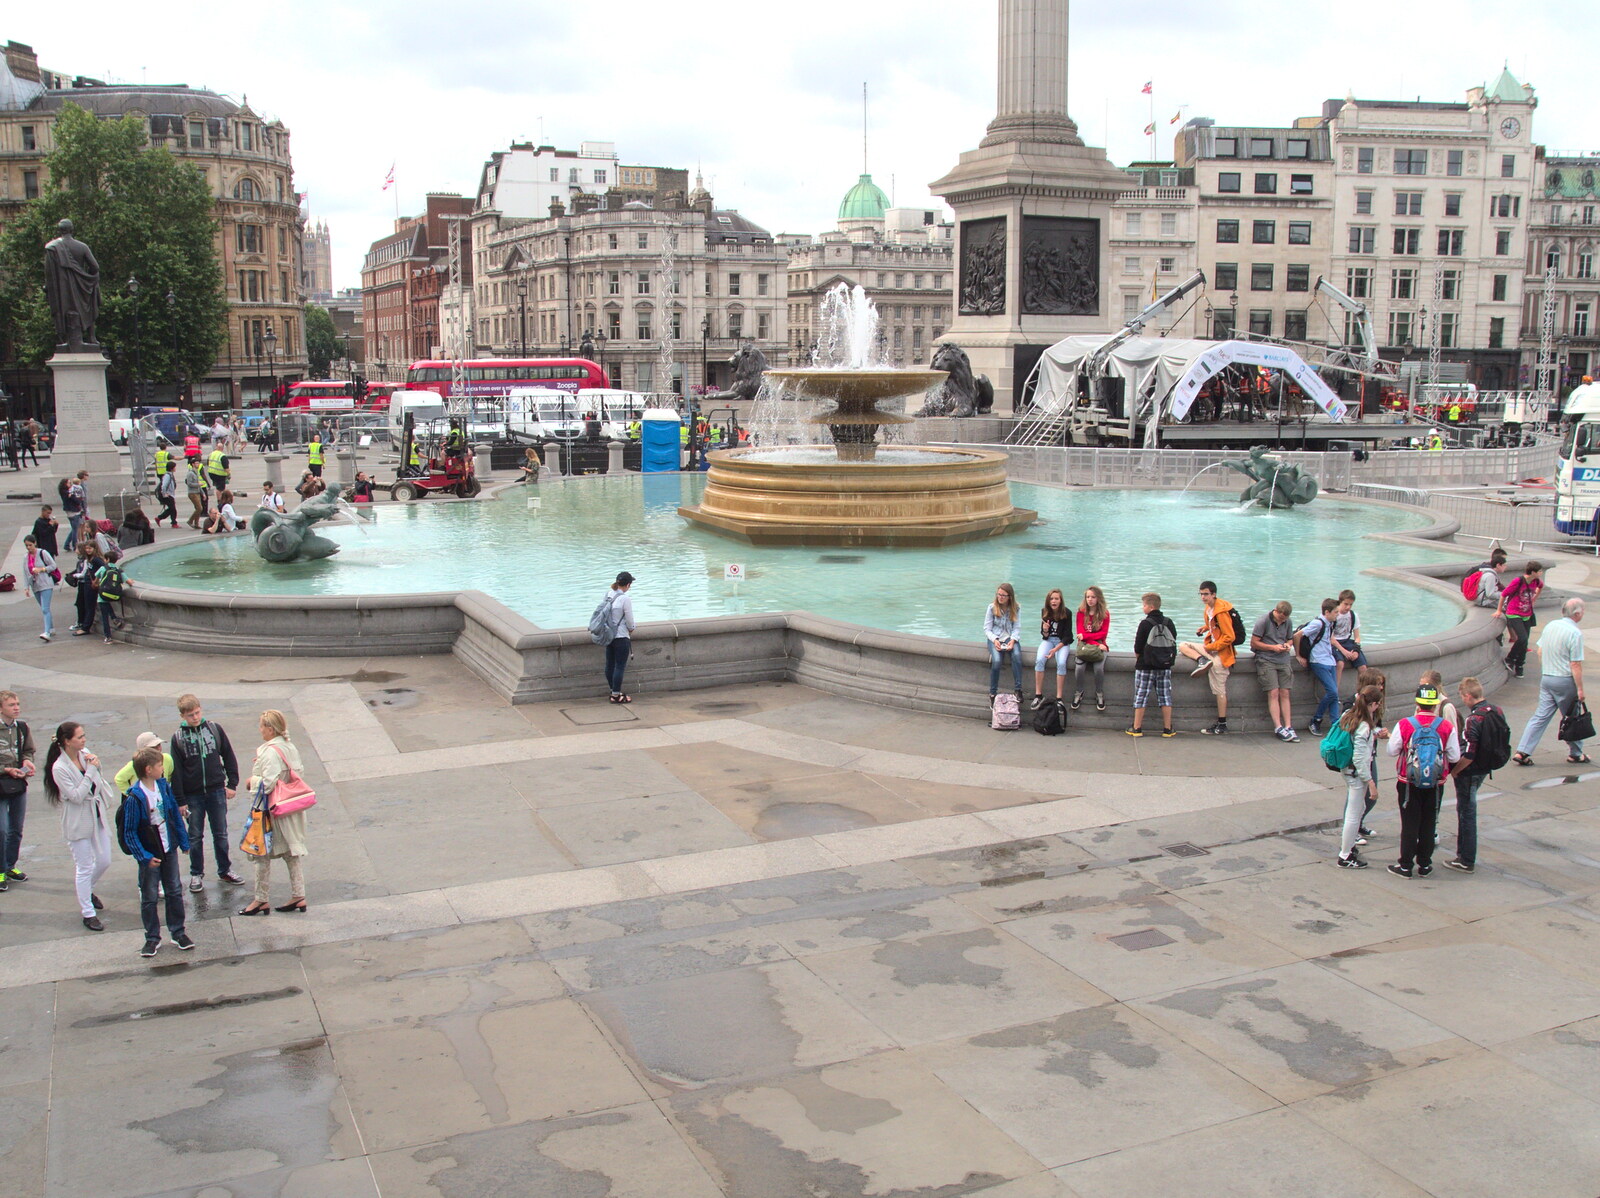 Trafalgar fountains from SwiftKey Innovation Days, The Haymarket, London - 27th June 2014